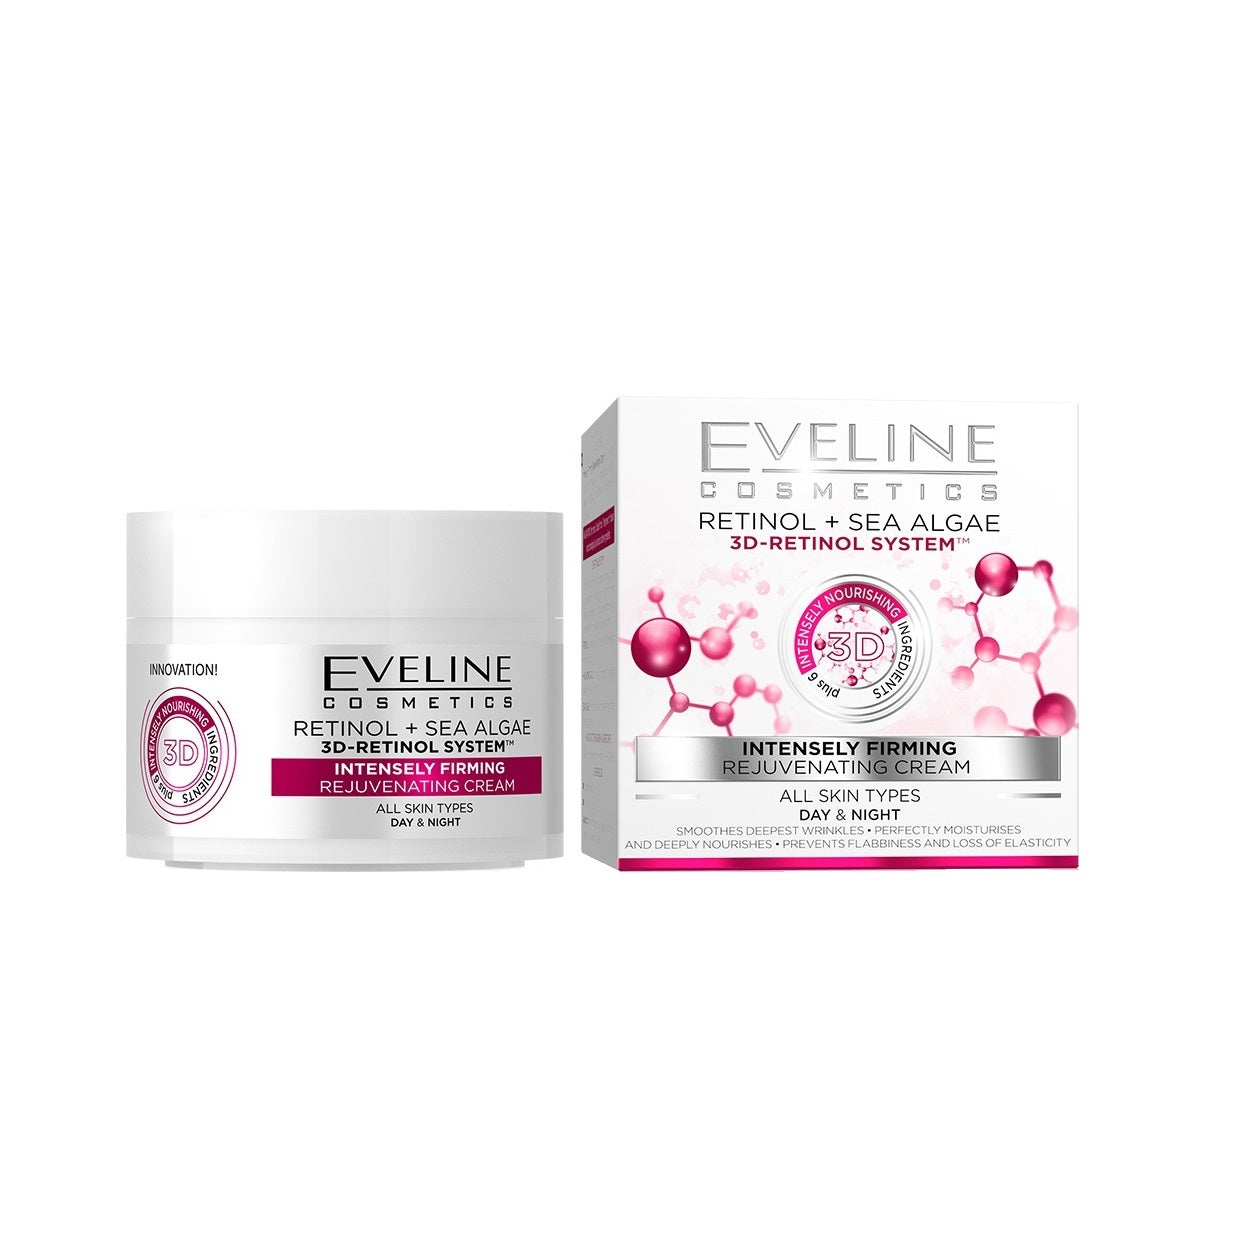 Eveline Cosmetics Creme Intensivo de Firmeza Rejuvenescedor com Retinol